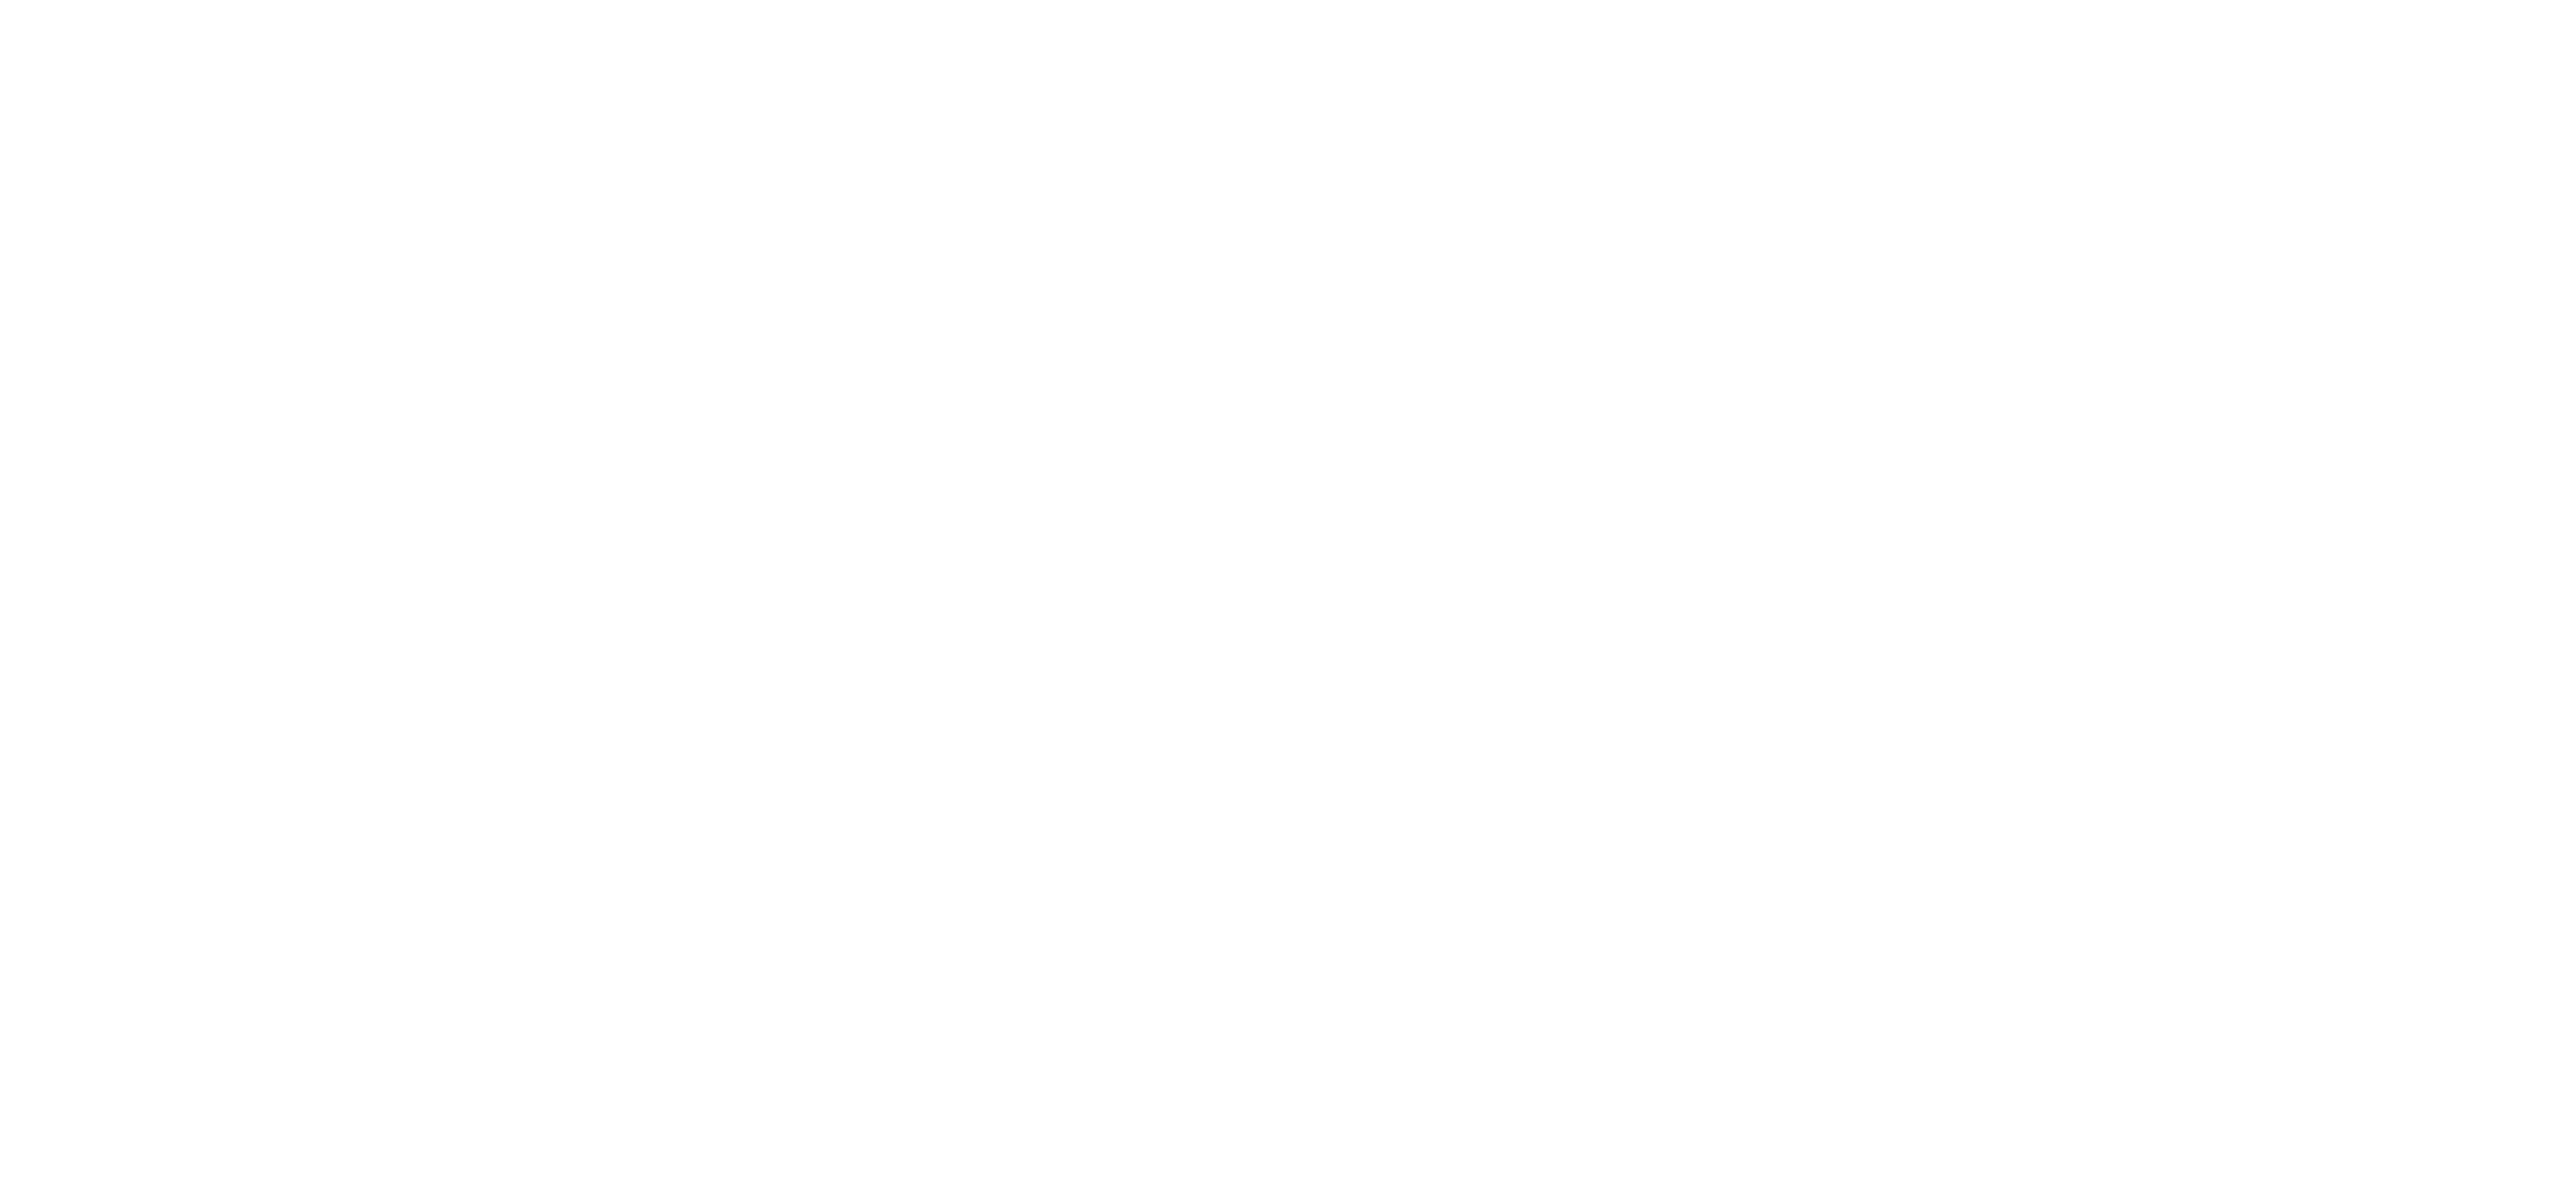 Soubor:Discord logo text white.png